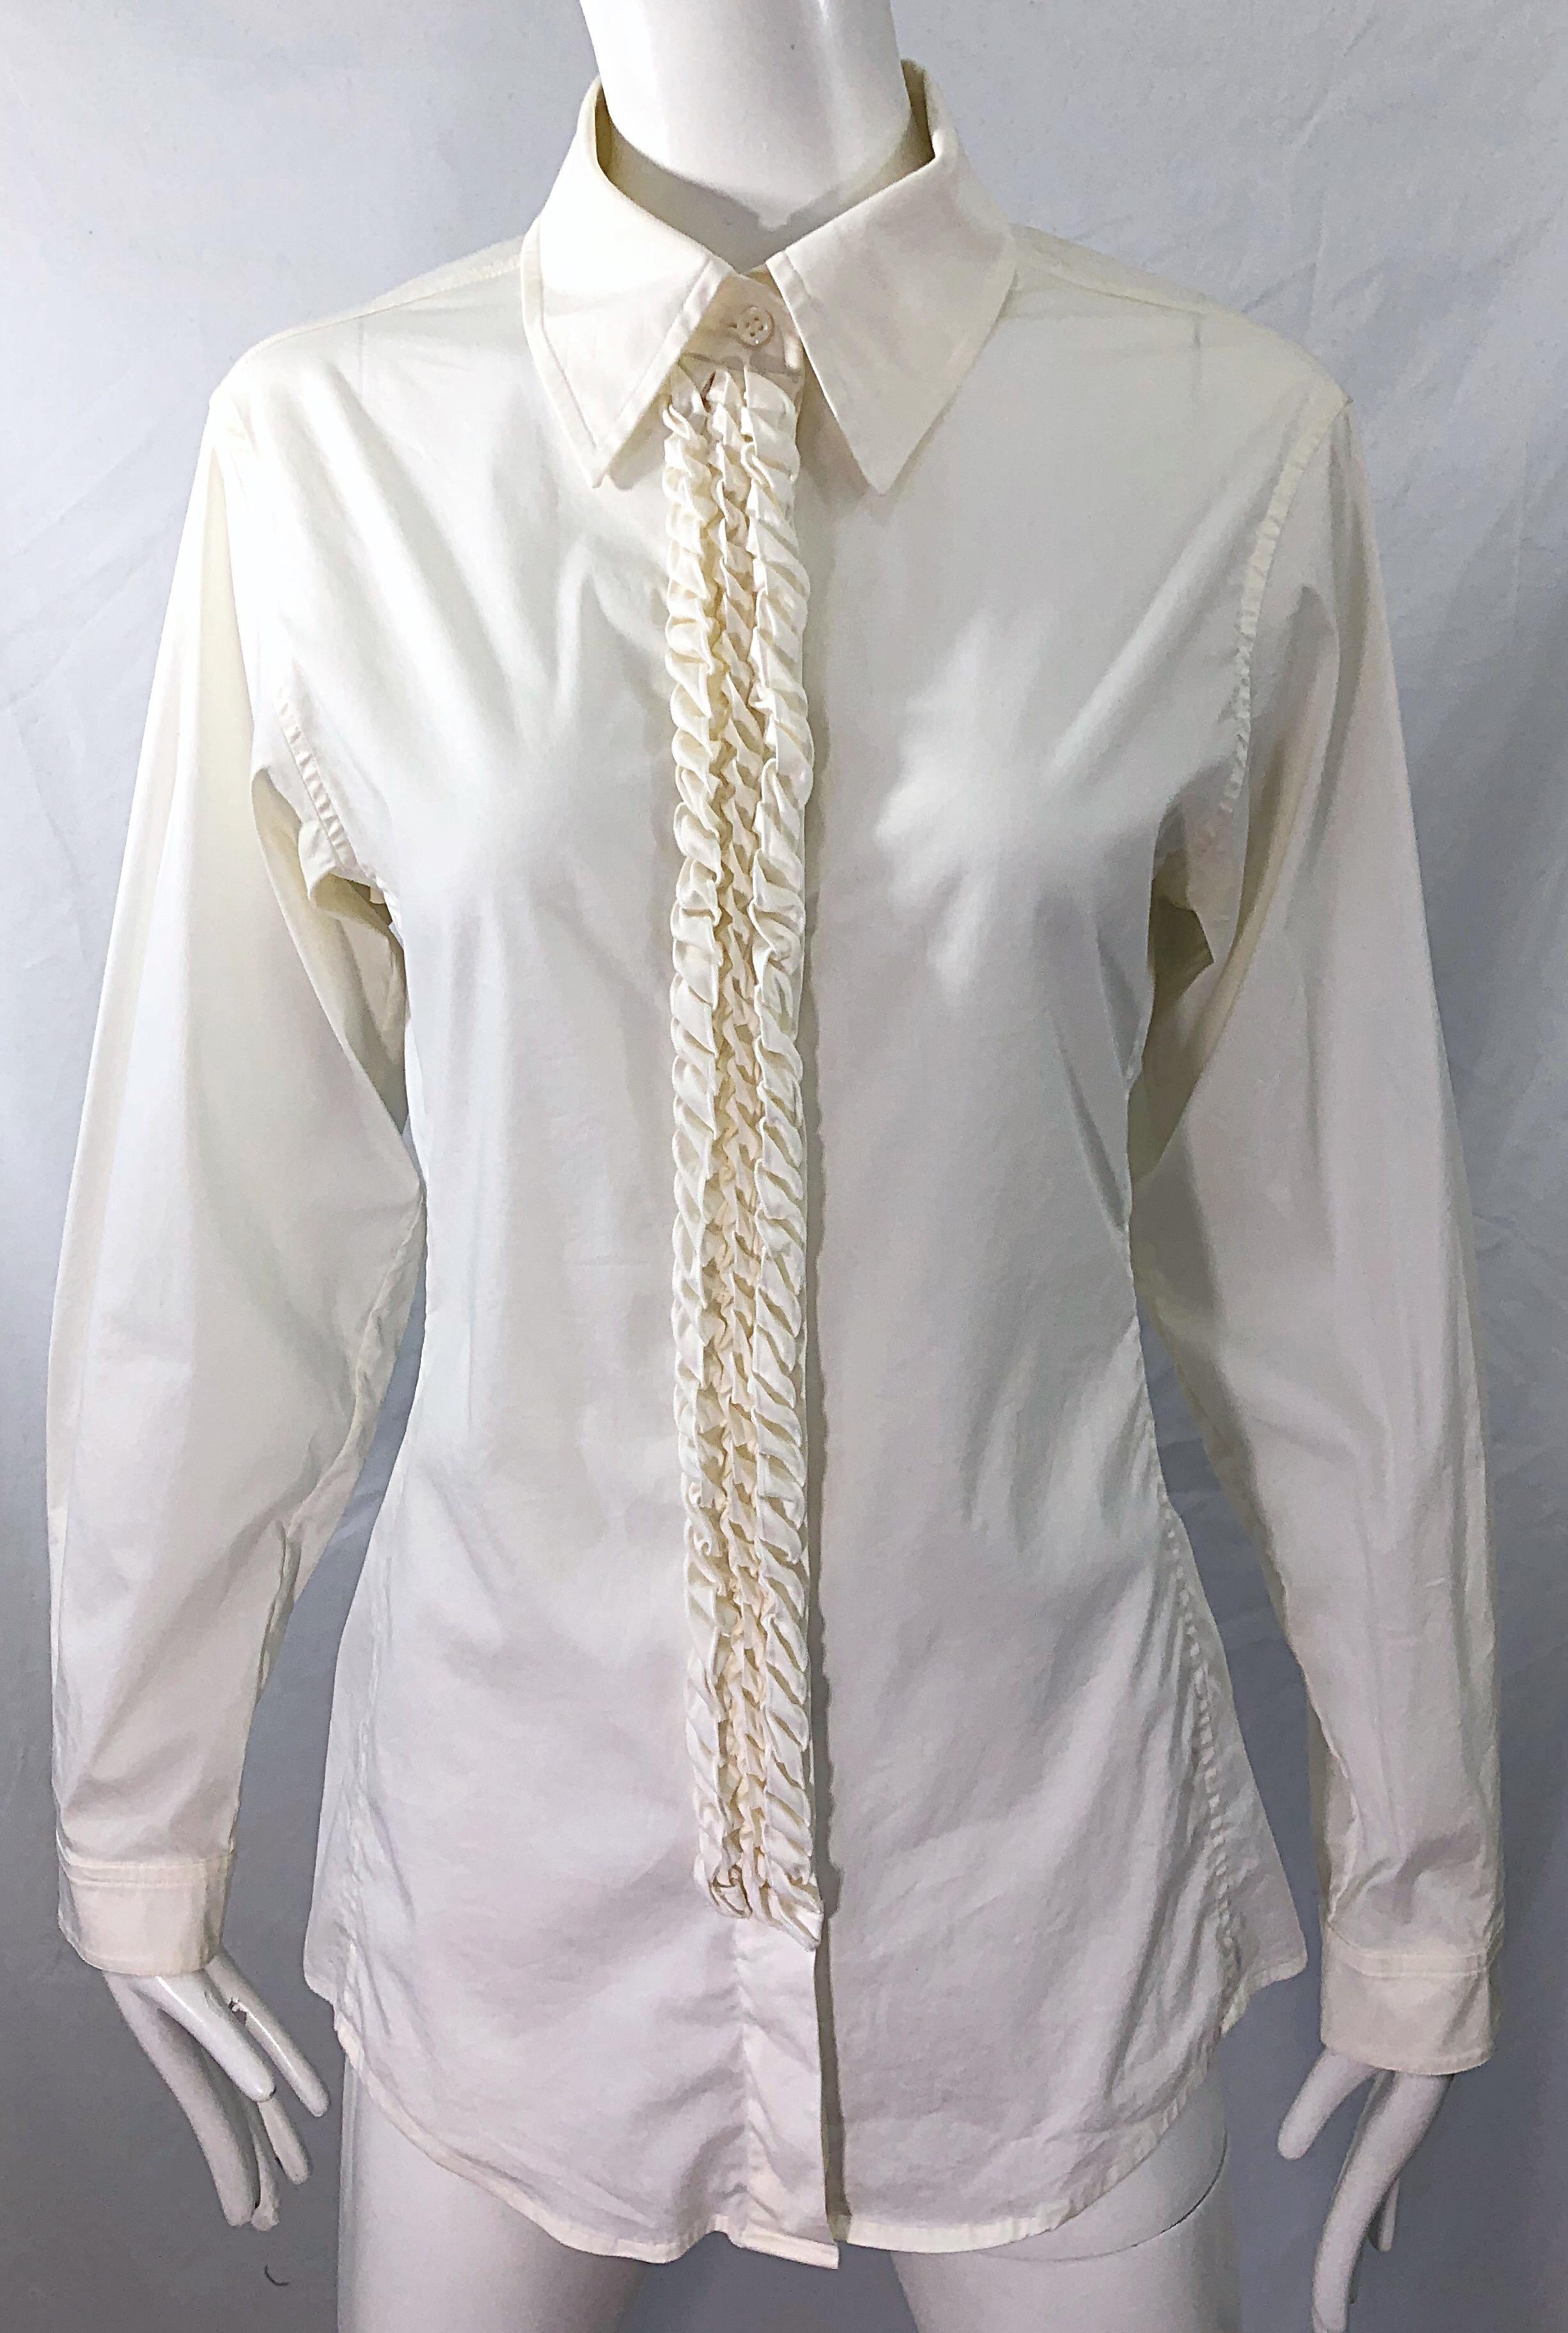 Yves Saint Laurent by Tom Ford YSL Size 40 / 8 Ivory White Tuxedo Blouse Shirt For Sale 5